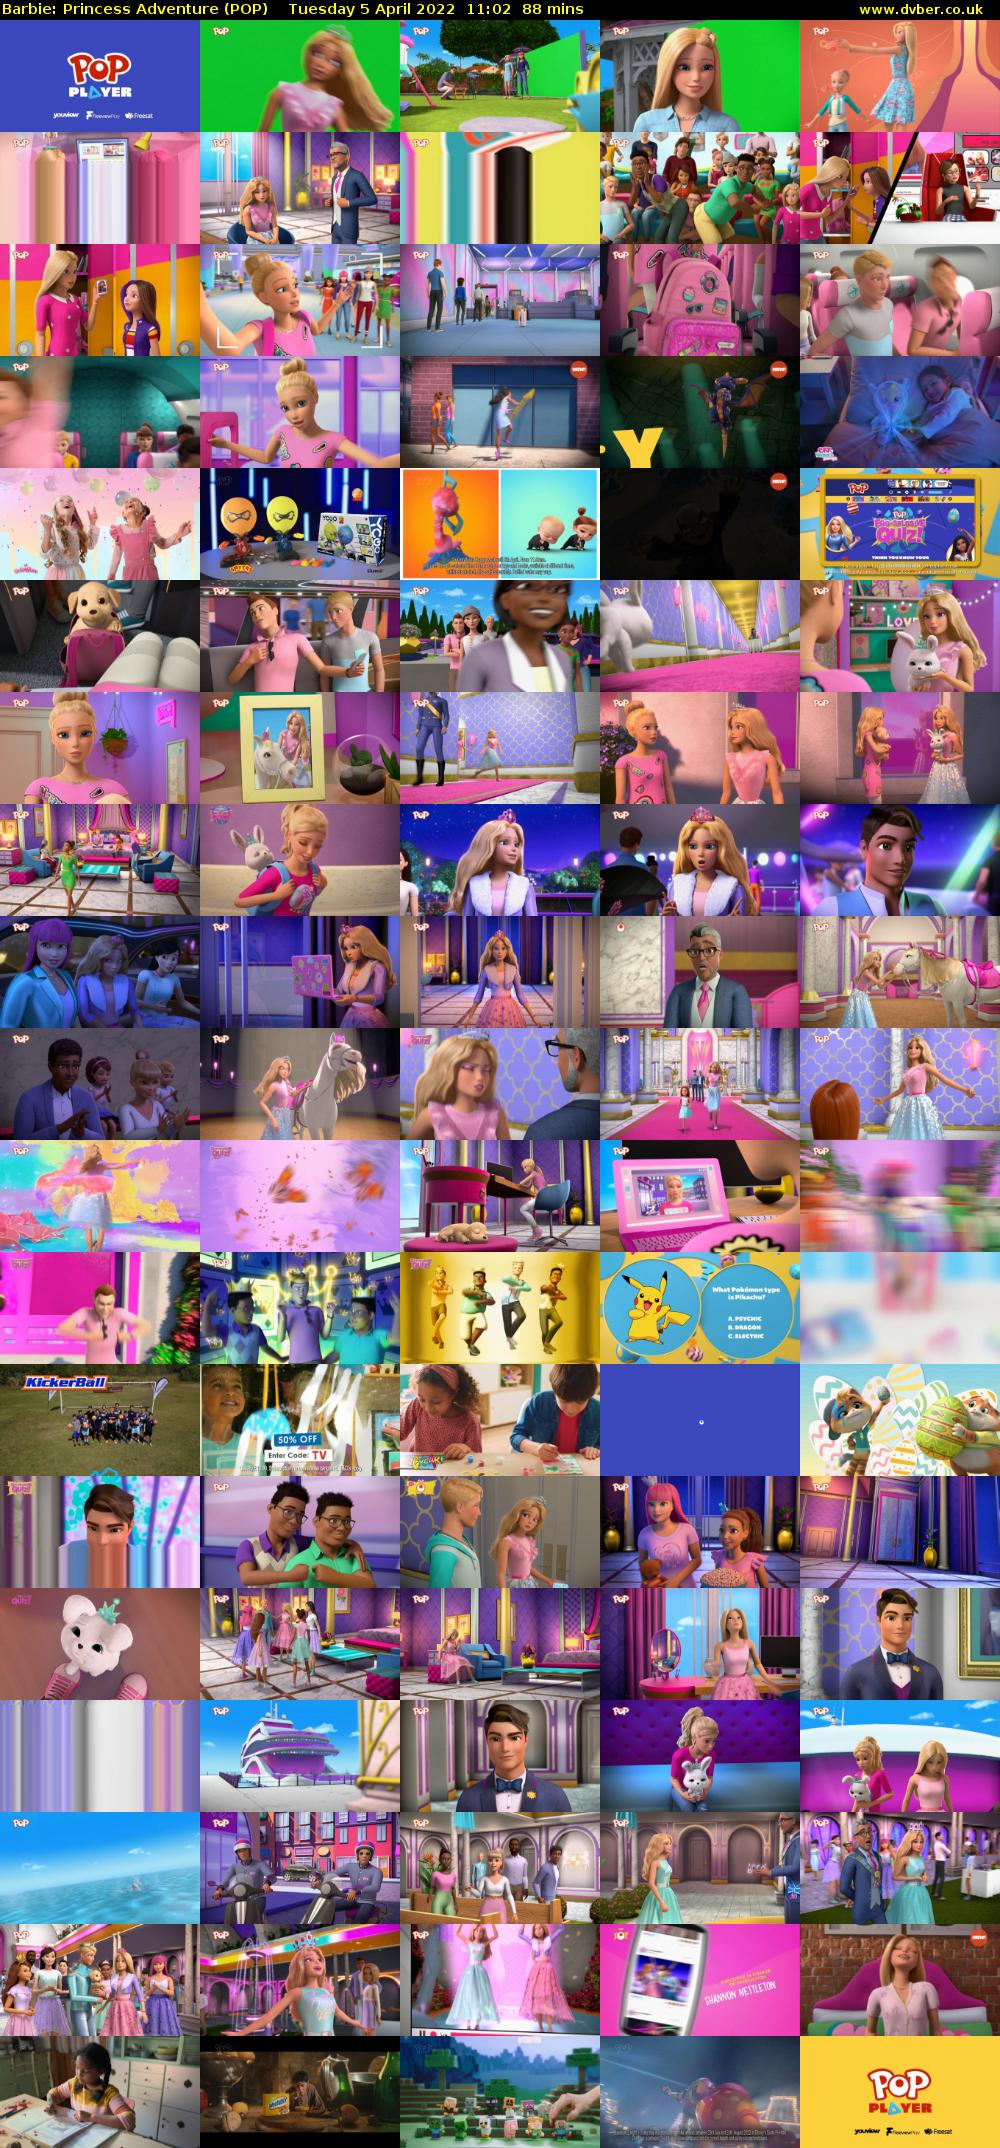 Barbie: Princess Adventure (POP) Tuesday 5 April 2022 11:02 - 12:30